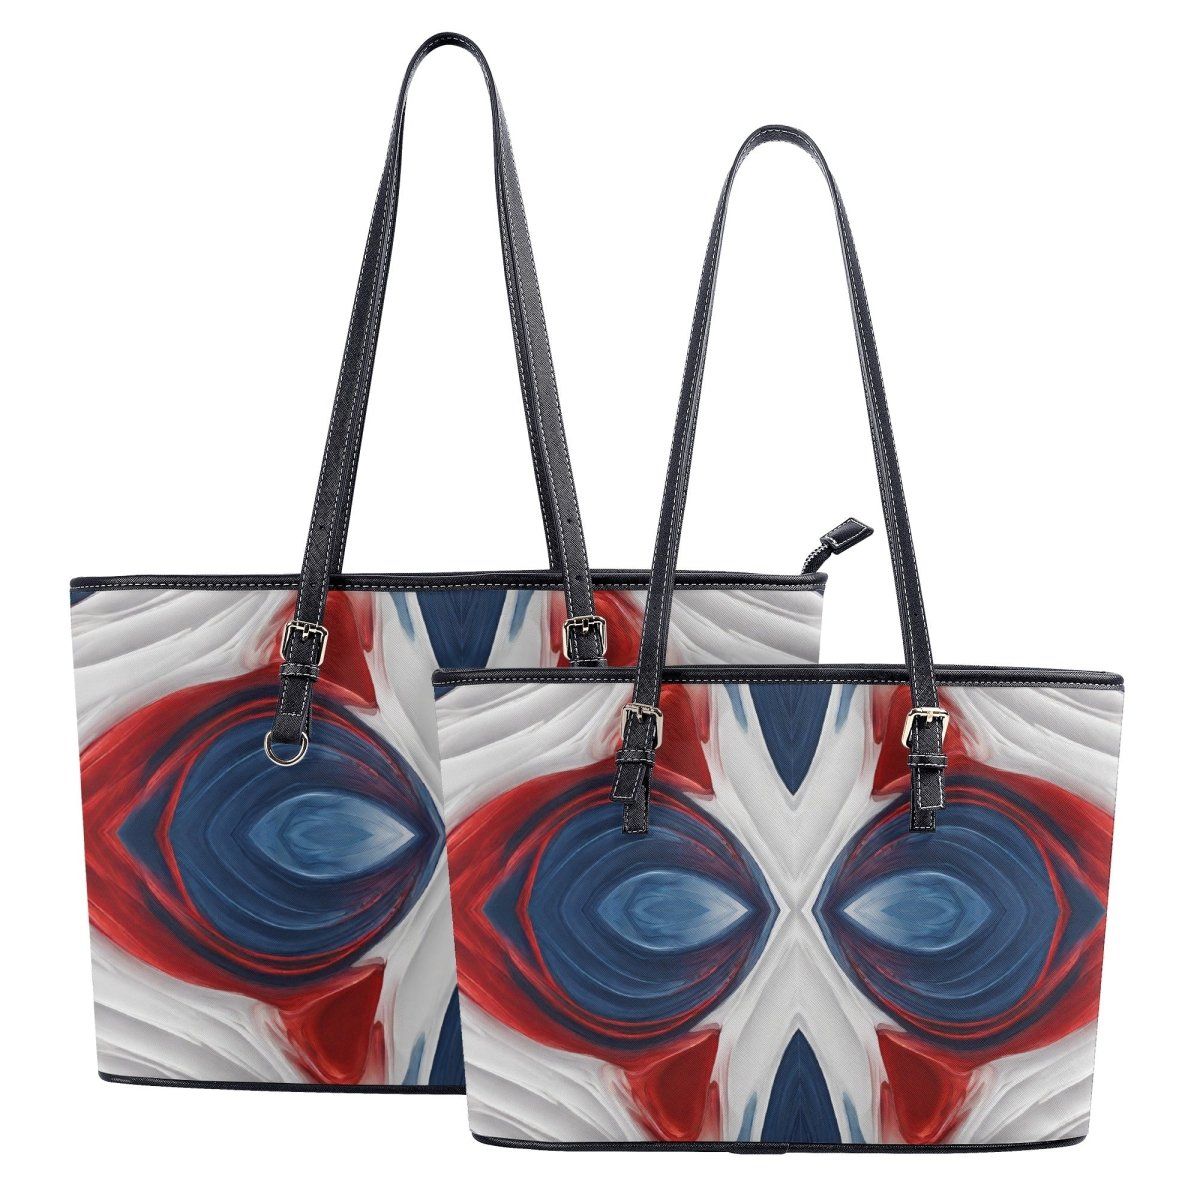 Fashion Red, White, and Blue Patriotic Tote Bag - Iron Phoenix GHG